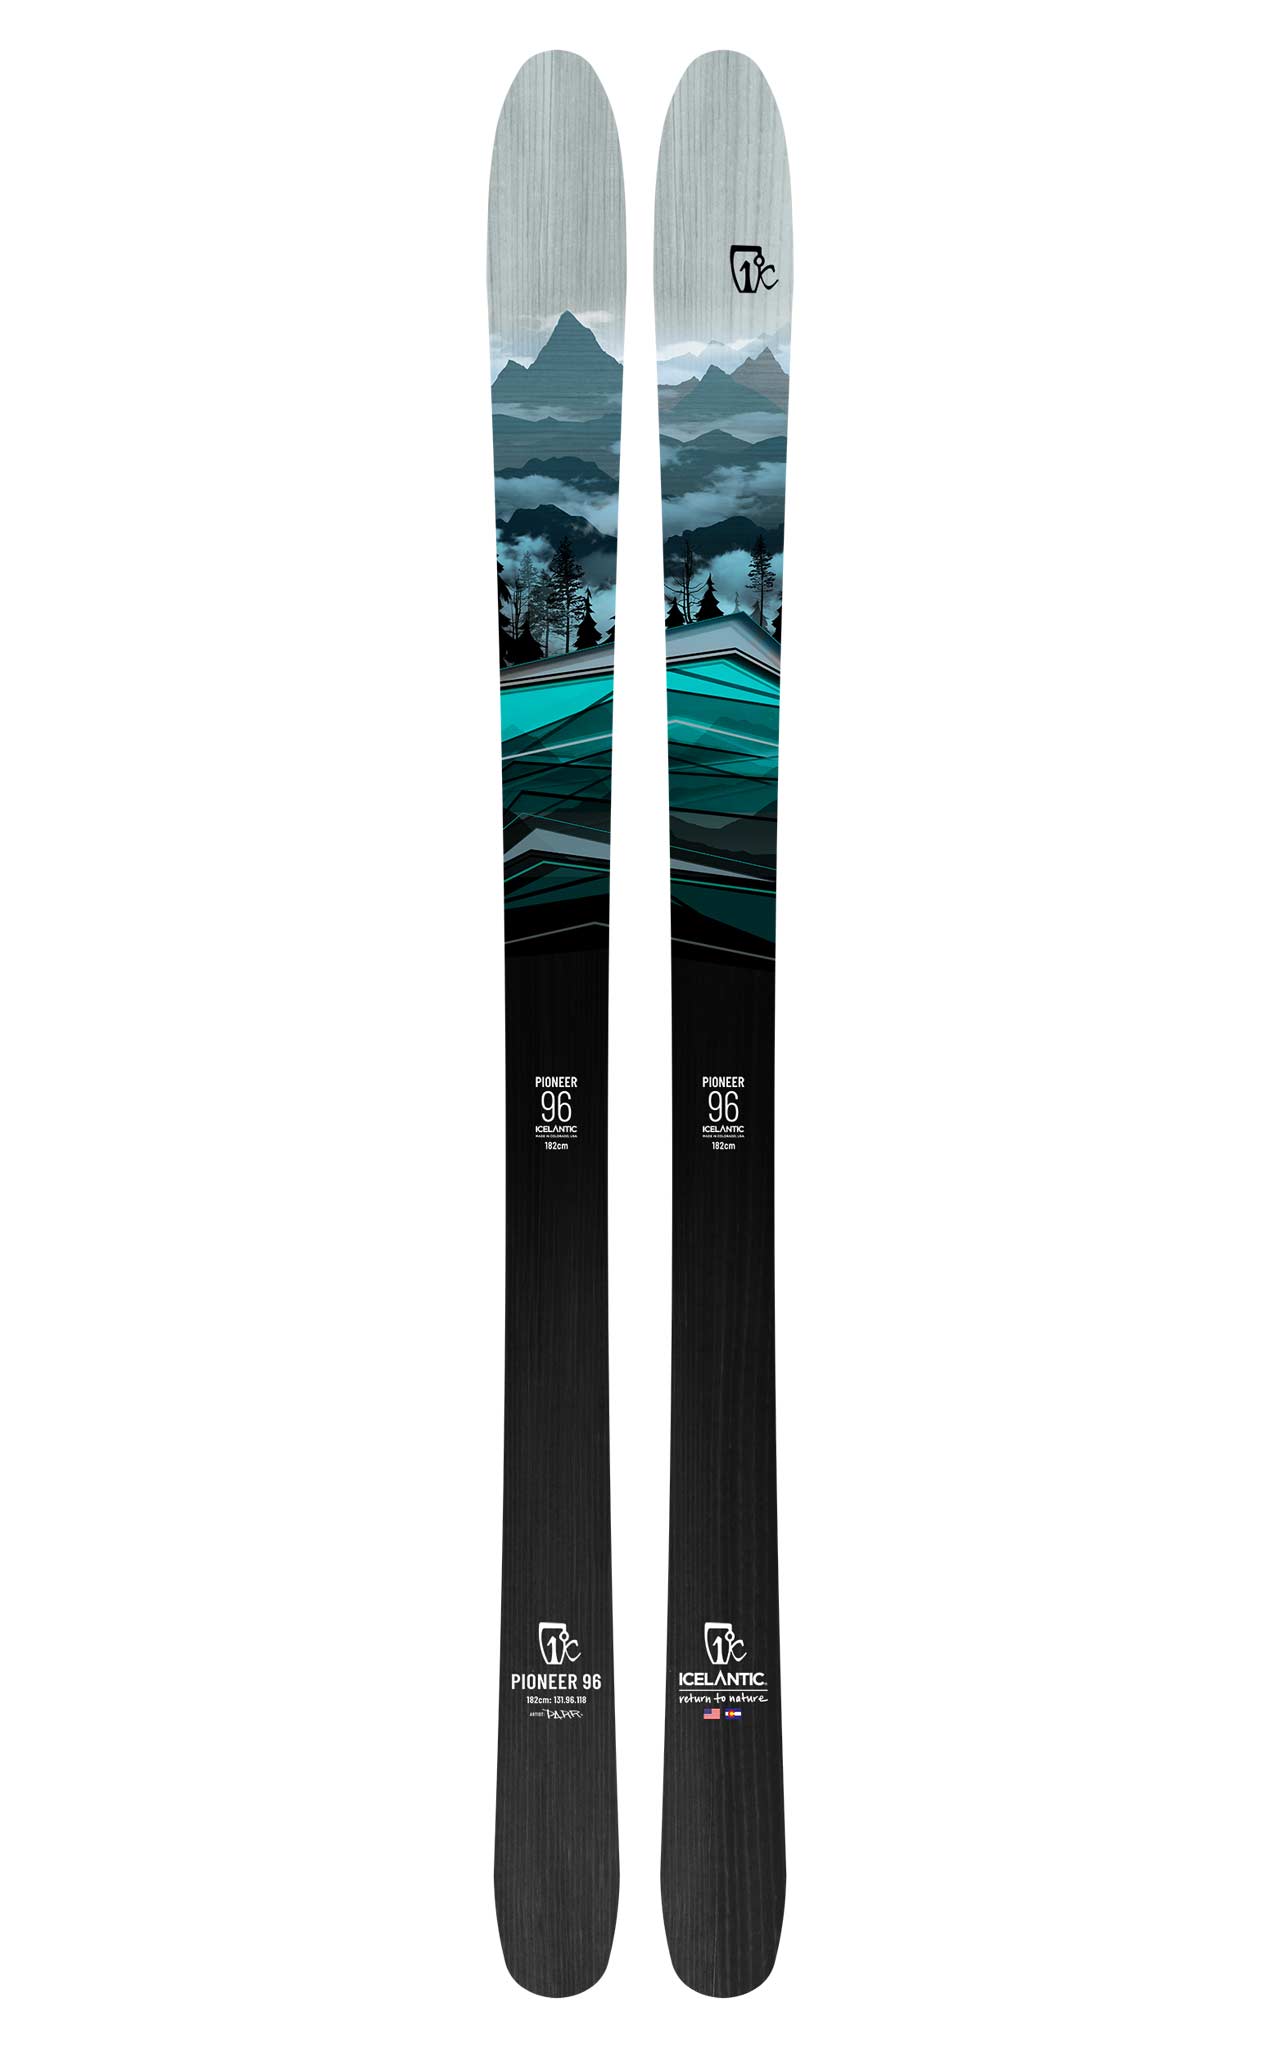 Універсальні лижі Icelantic Pioneer 96 2022/2023 182cm